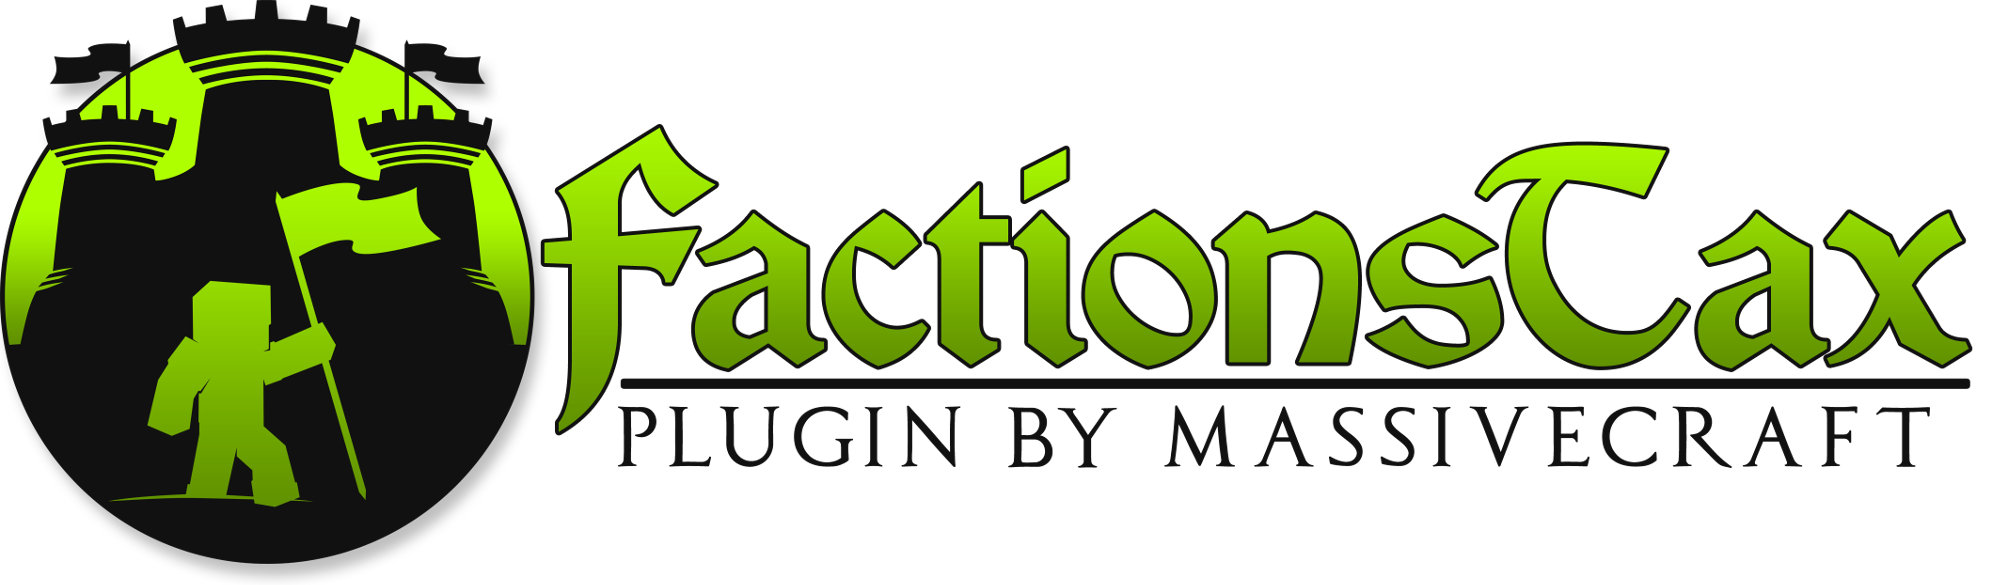 massivecraft-logotype-plugin-factionstax-2000.jpg